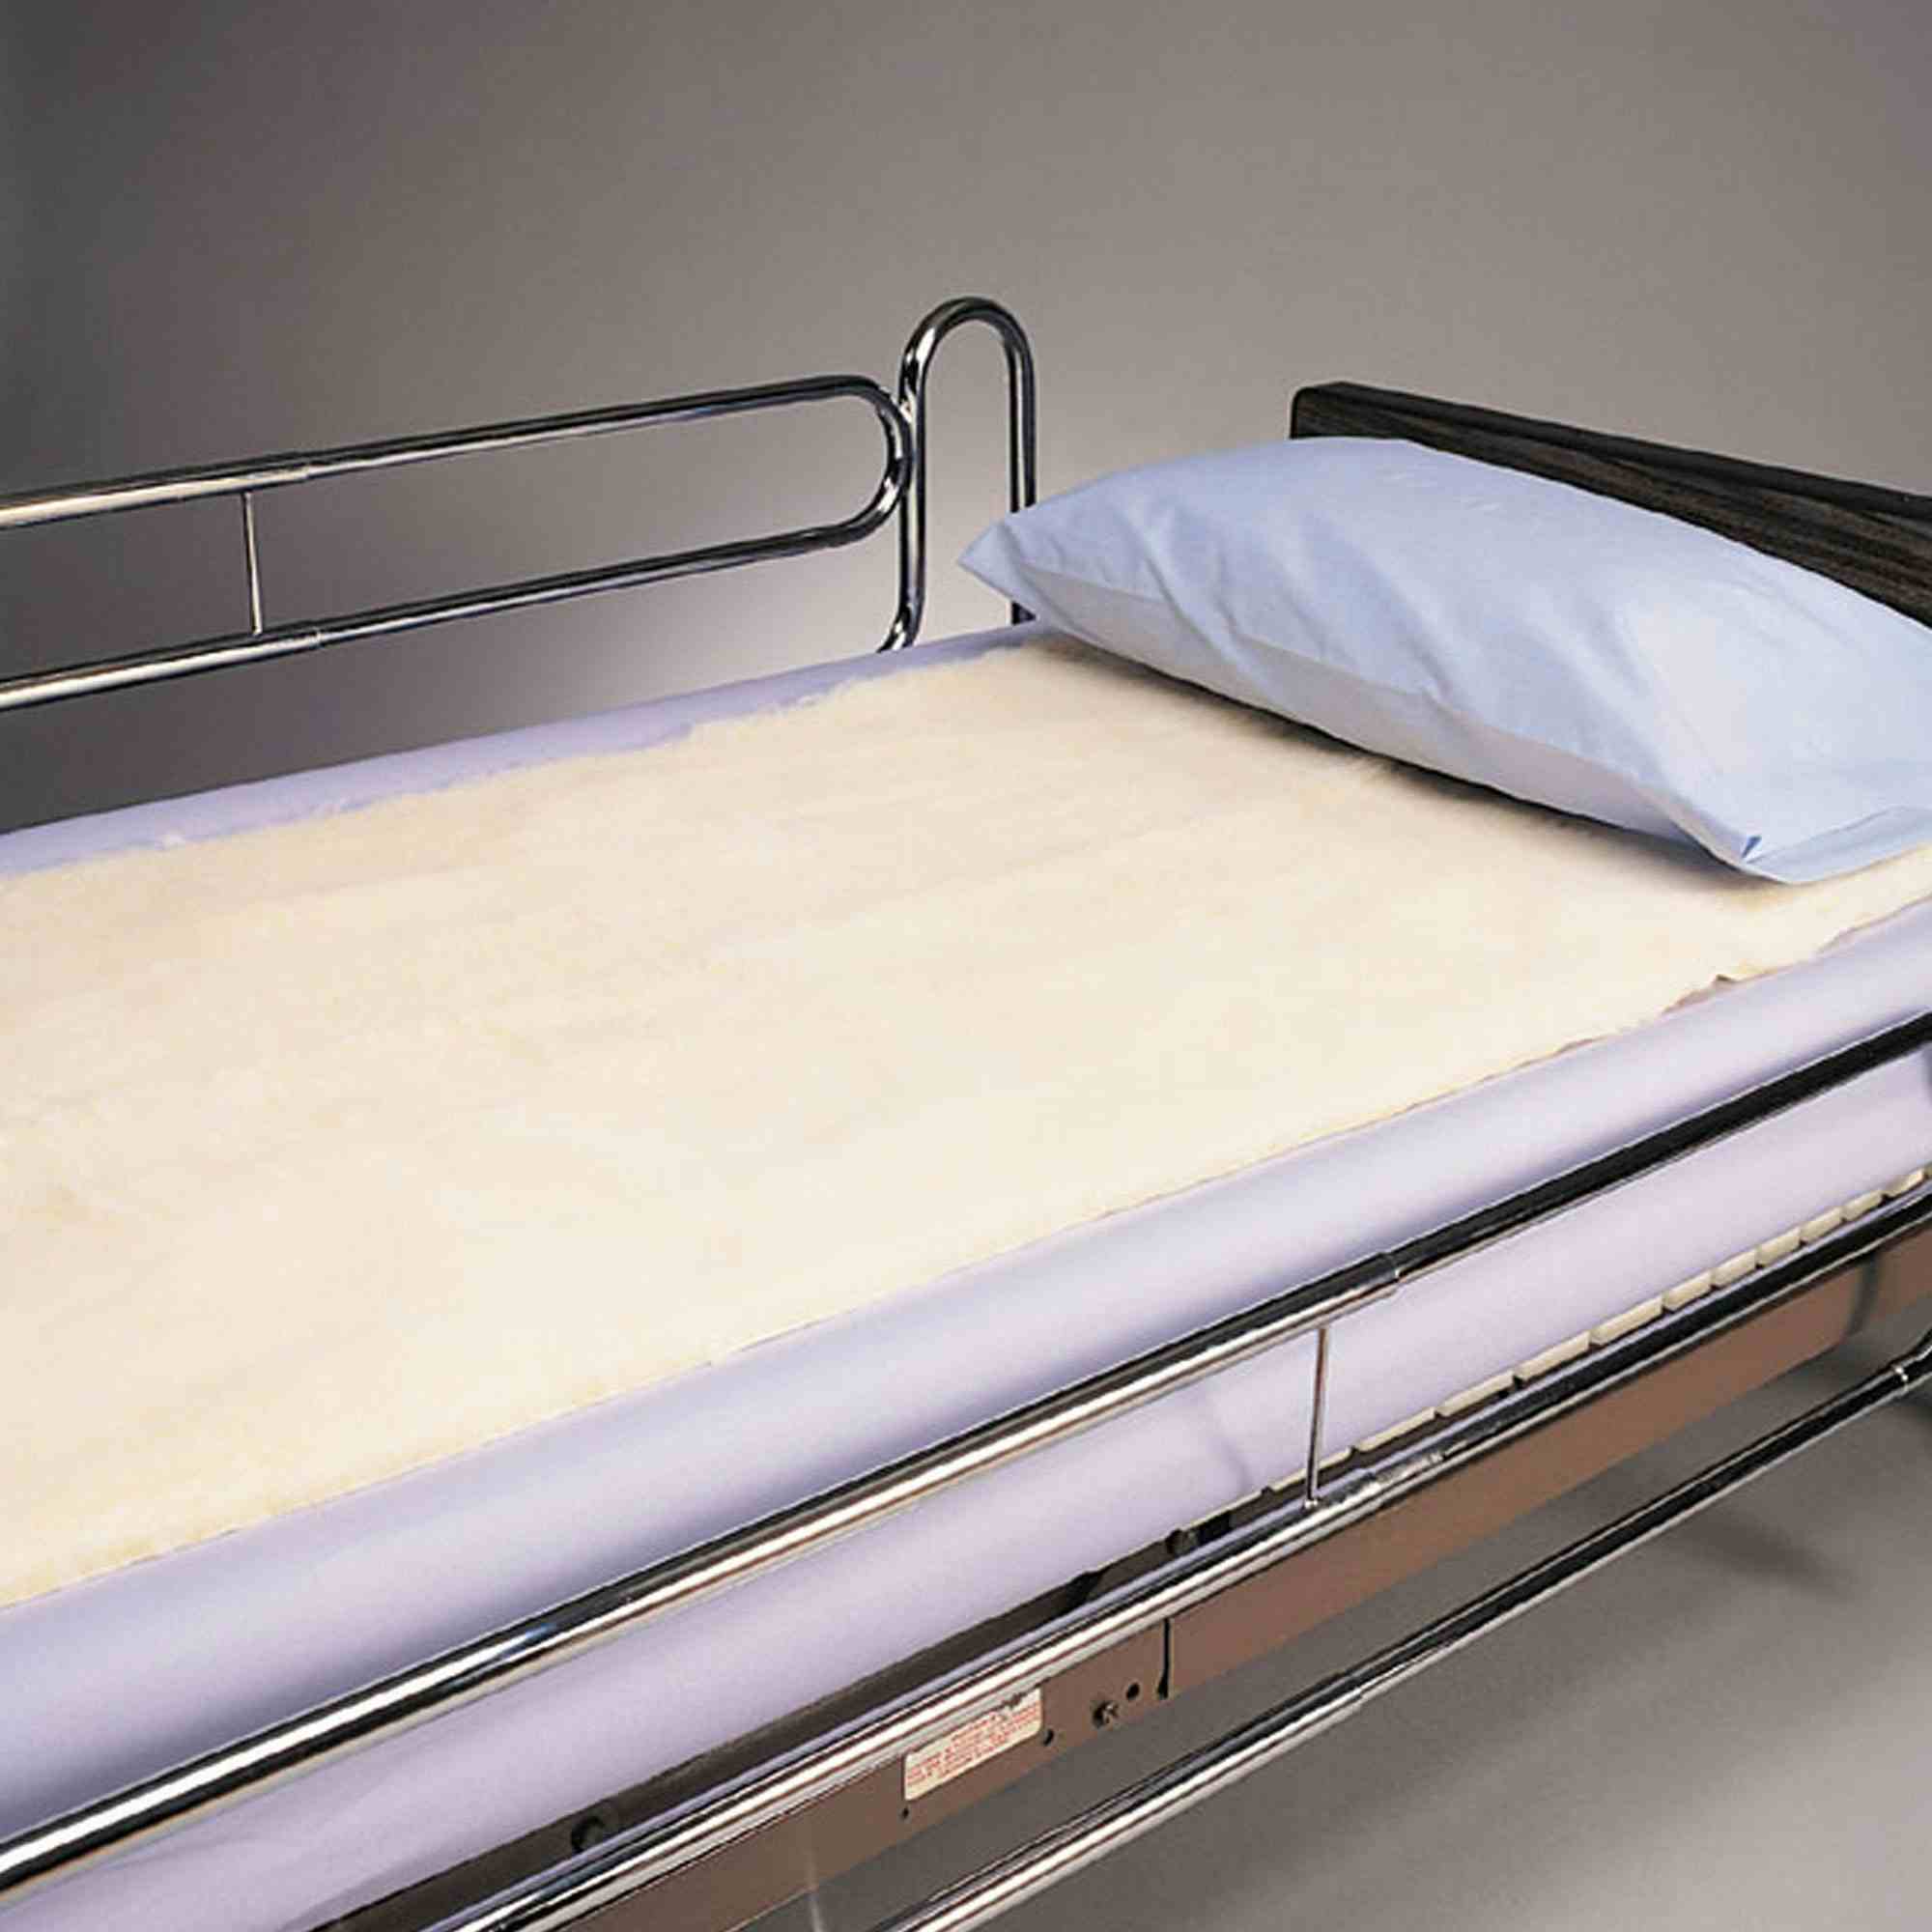 SkiL-Care Decubitus Bed Pad, White, 501090, 1 Pad